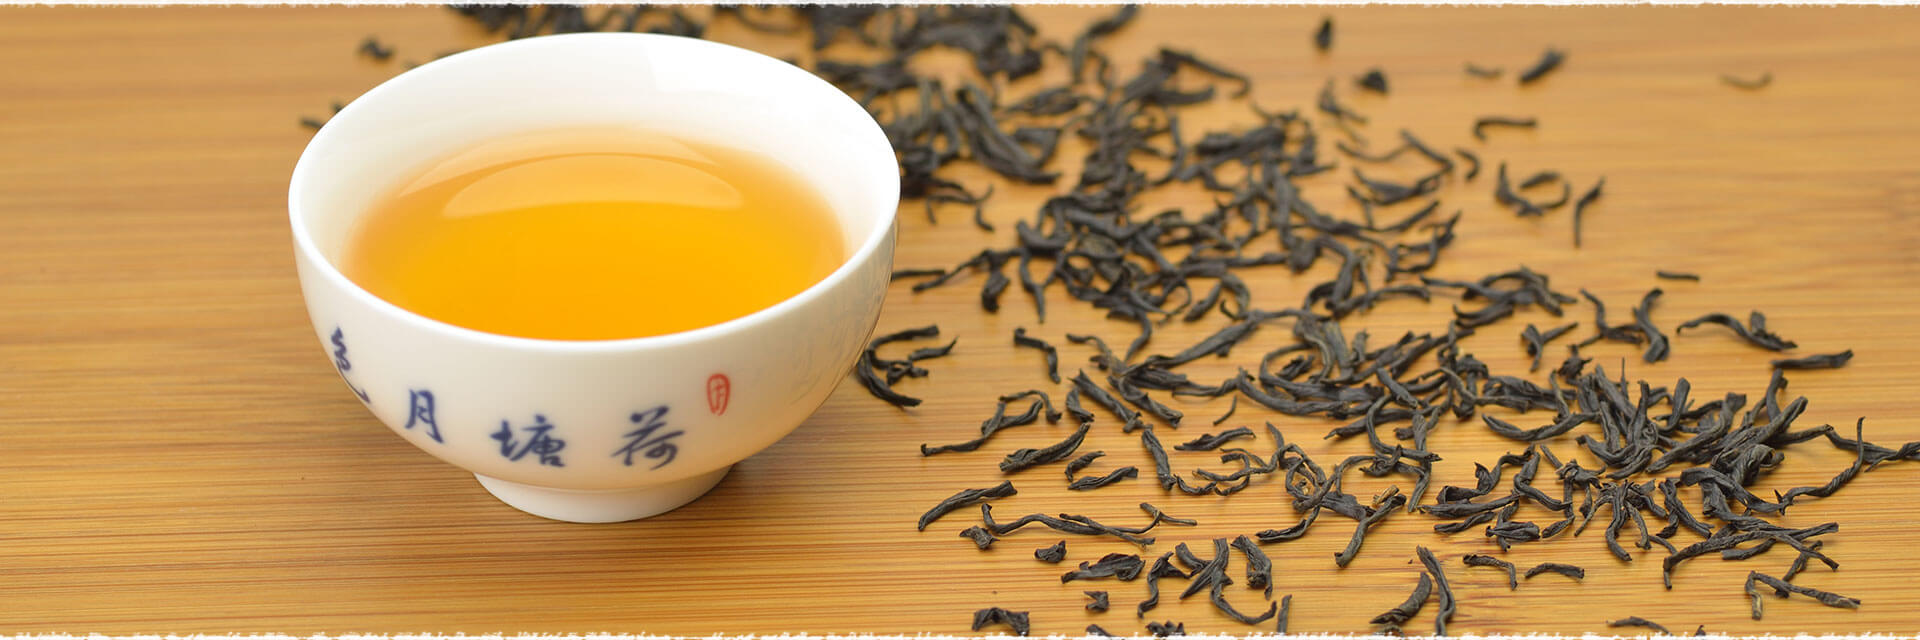 Distribution of Fujian tea